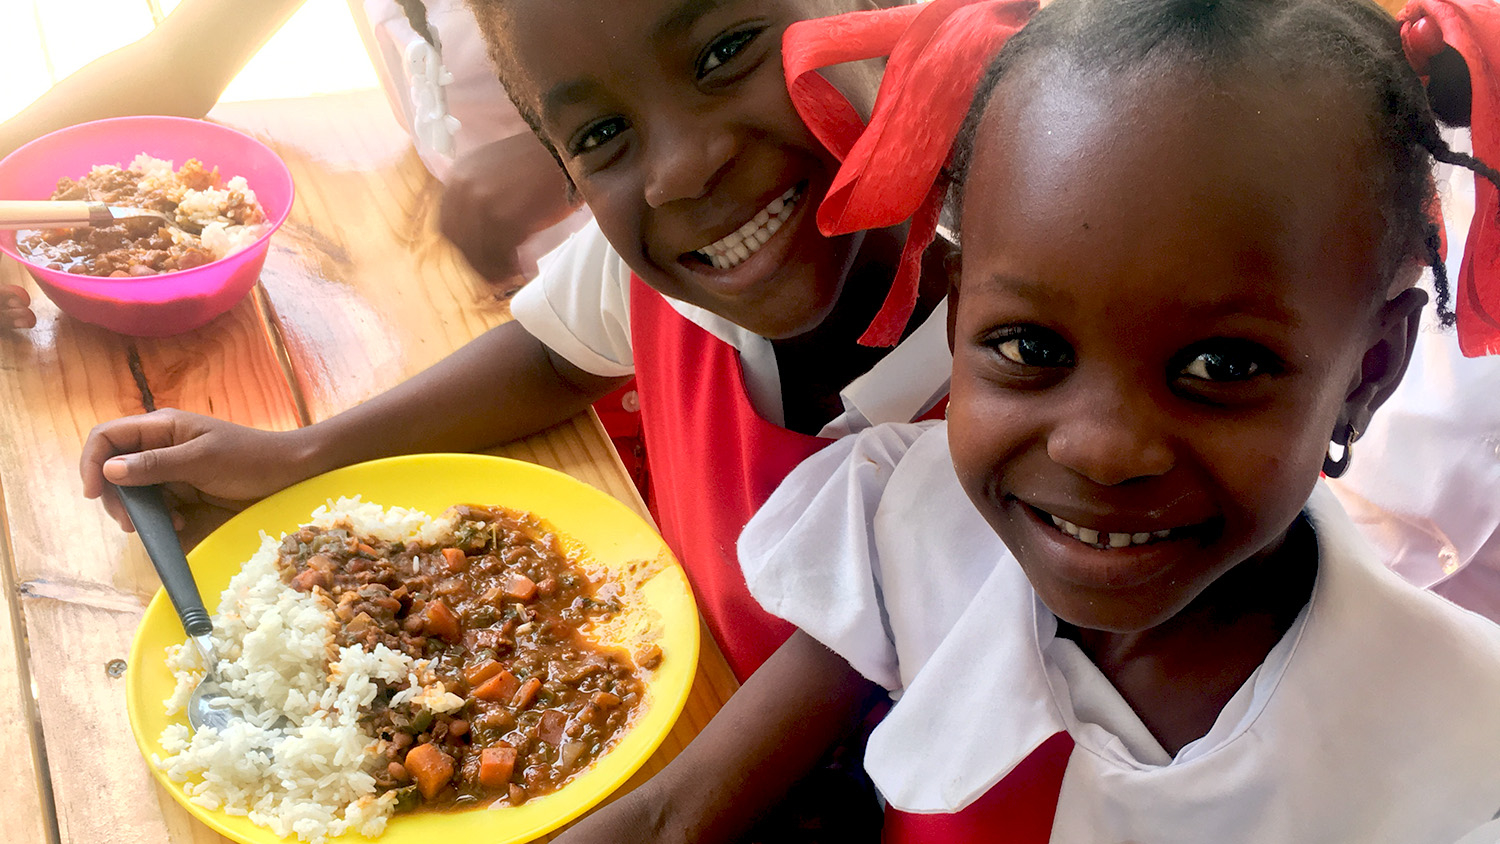 Haitian children eating lunch via the NCSU Haiti Goat Project